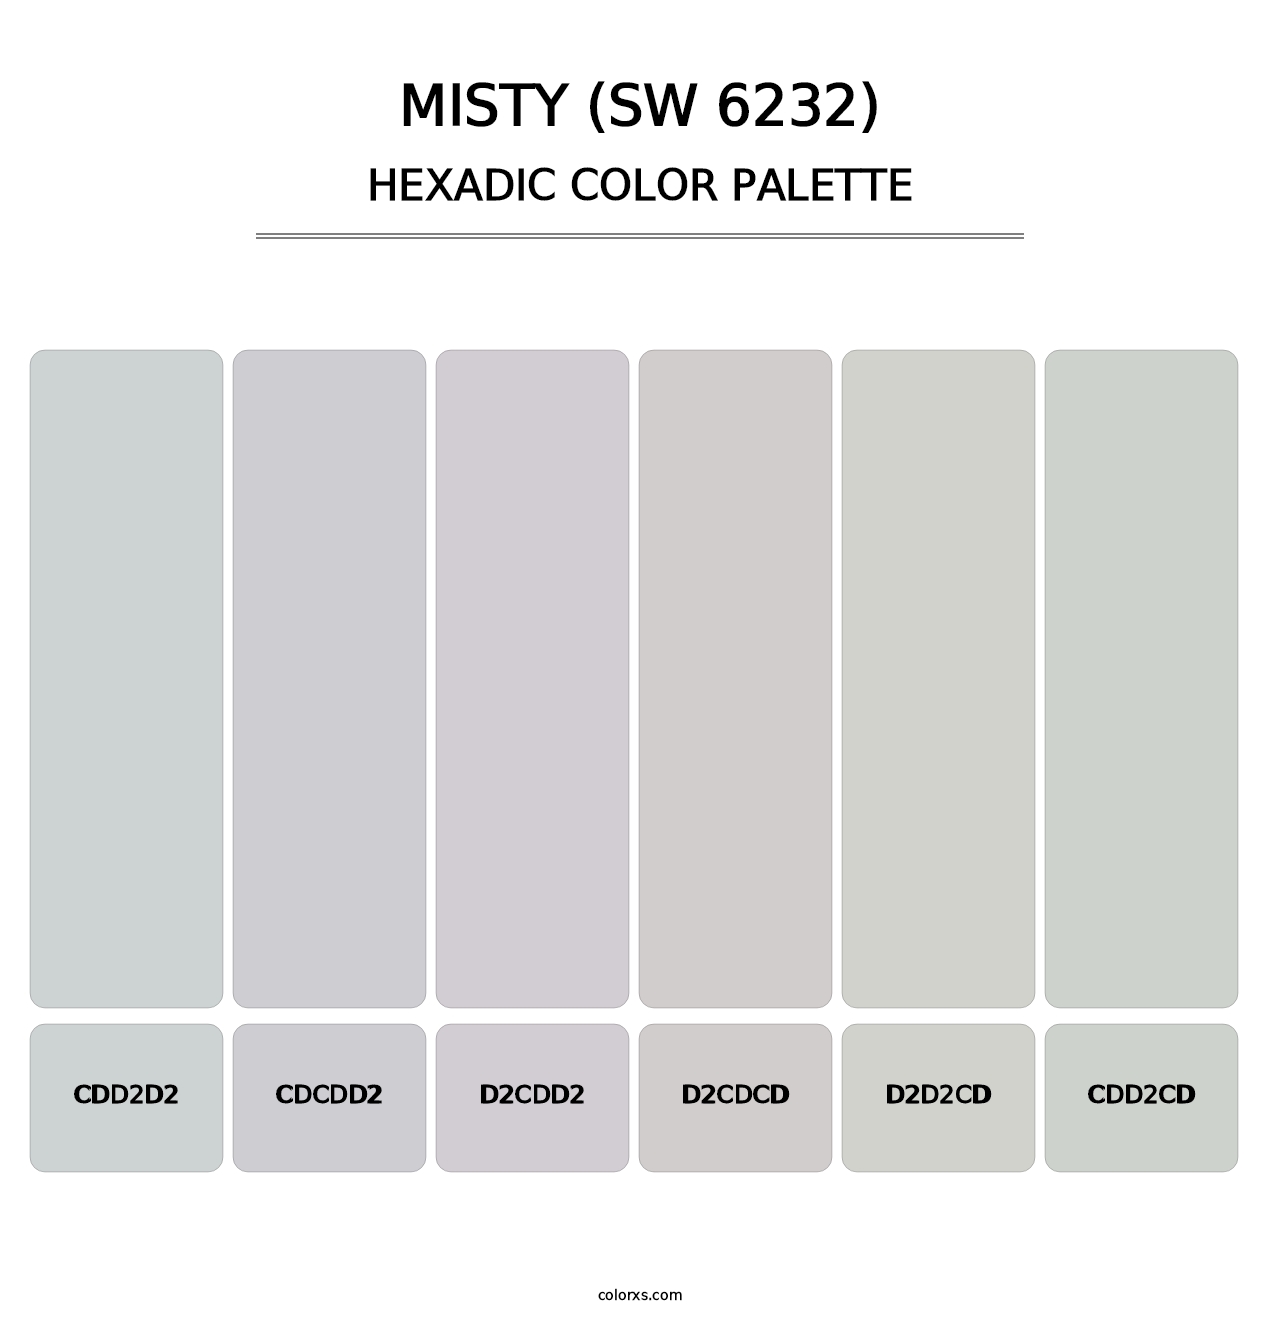 Misty (SW 6232) - Hexadic Color Palette